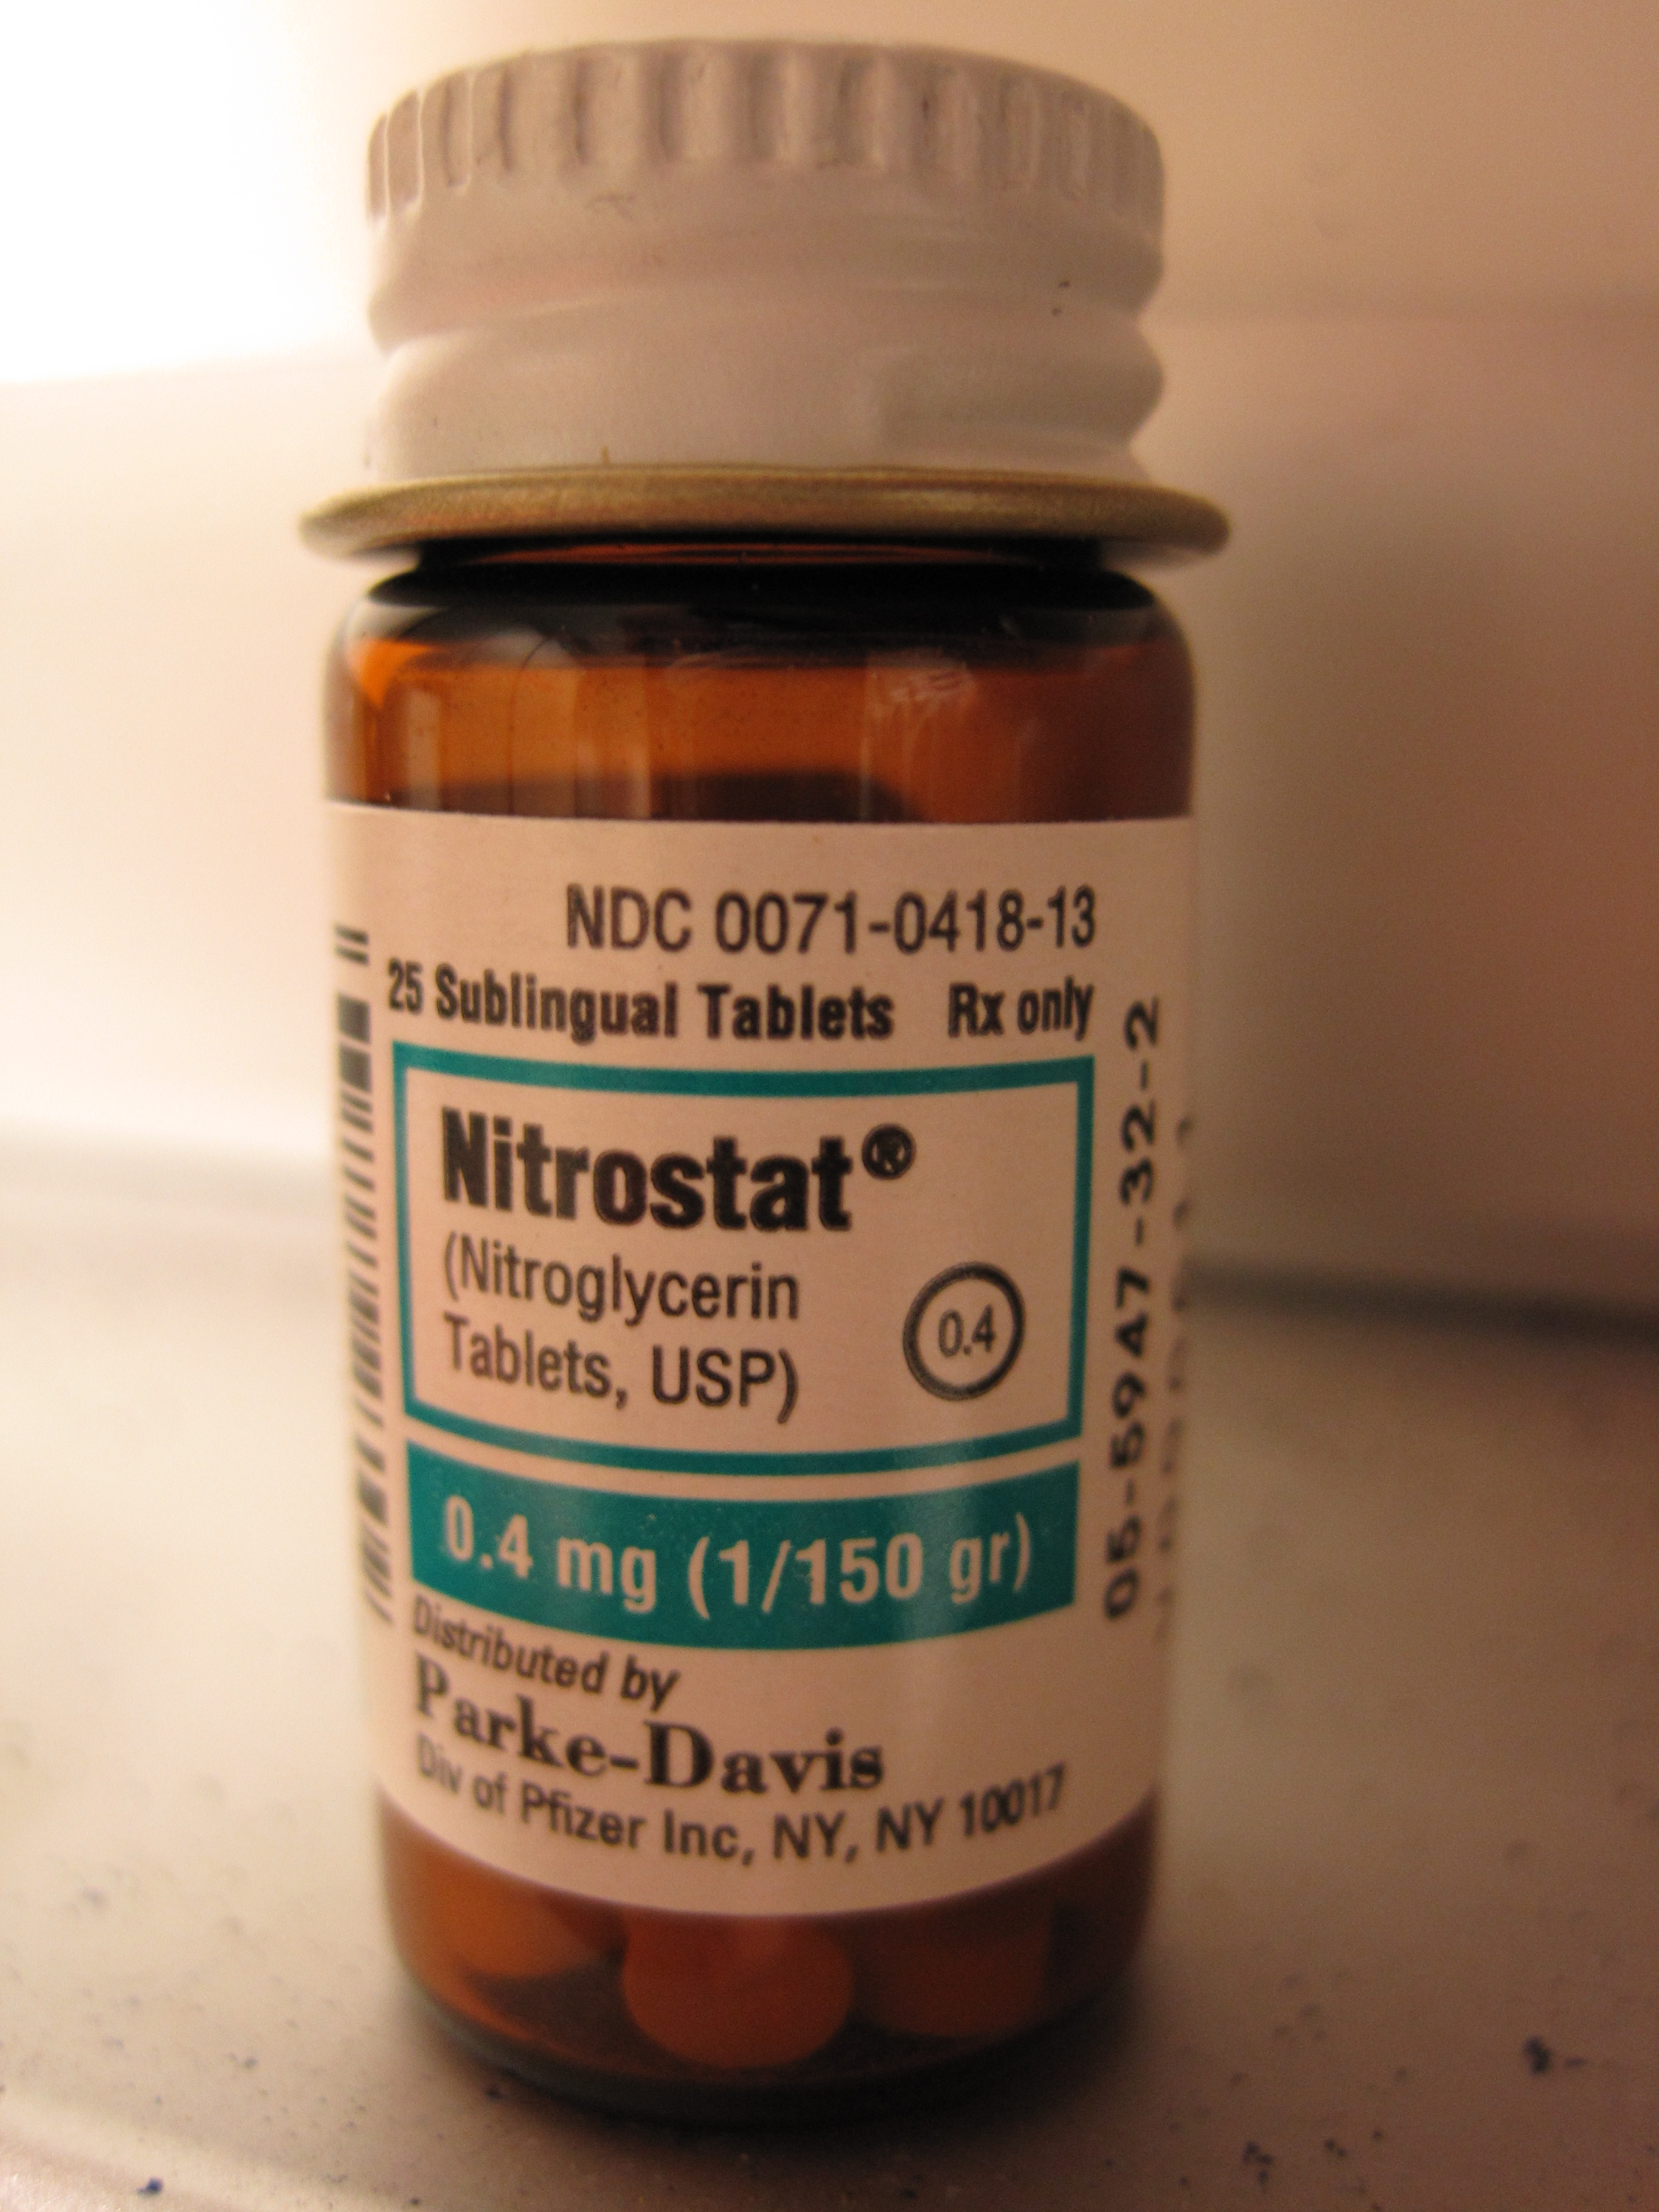 A bottle containing nitroglycerin tablets.